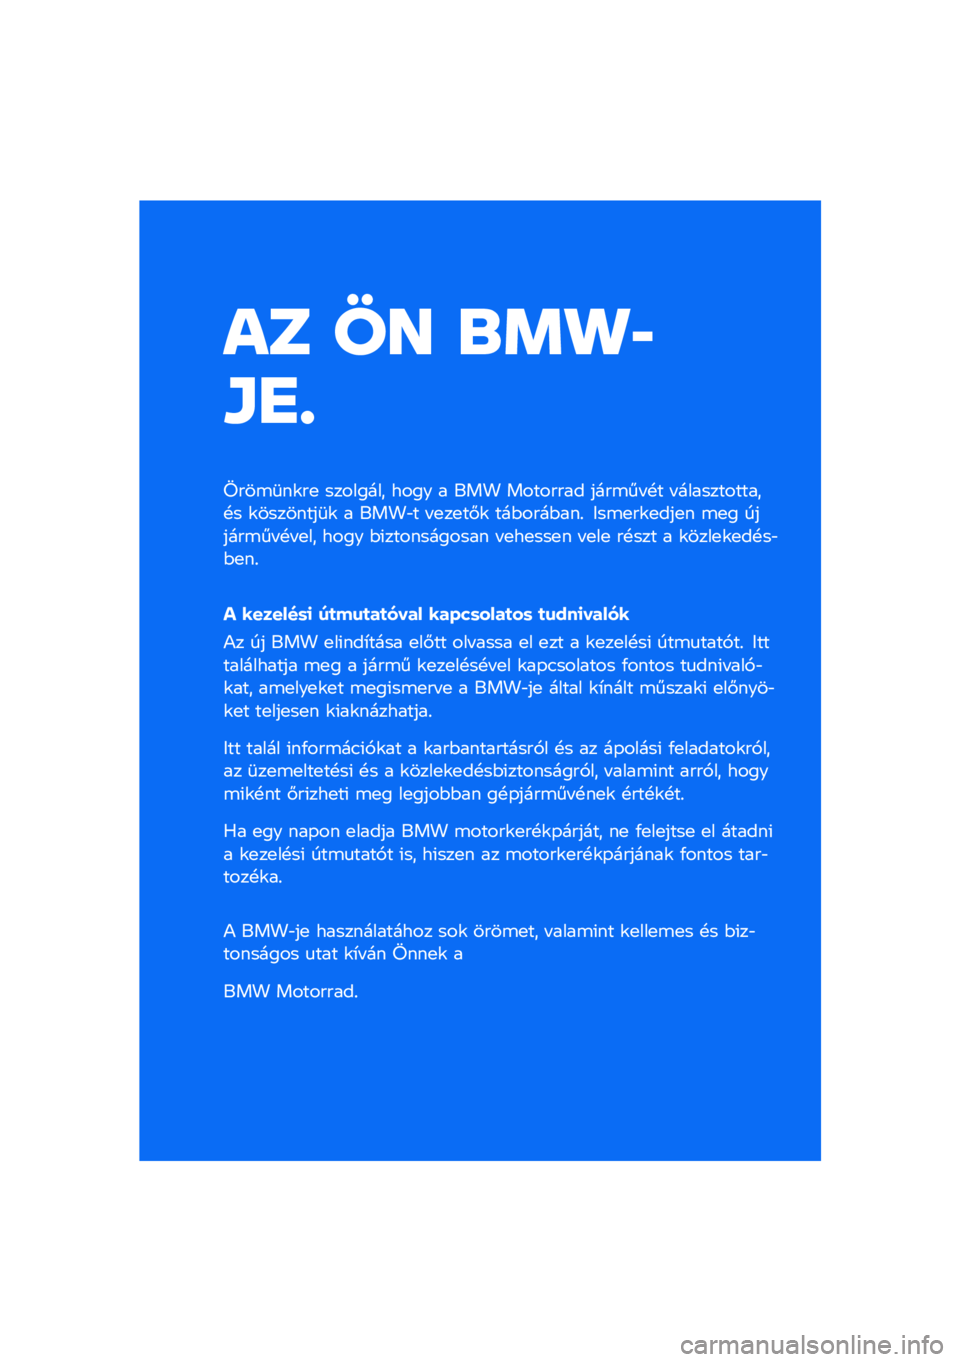 BMW MOTORRAD M 1000 RR 2021  Kezelési útmutató (in Hungarian) �� �� �\b�	�
�
�\f�
�
����\b�	��\f��
 �������� ���� � ��� �������� ����\b�� �!� � ������������!� �\f��������	�\f � ����"� � �
��
��#�\